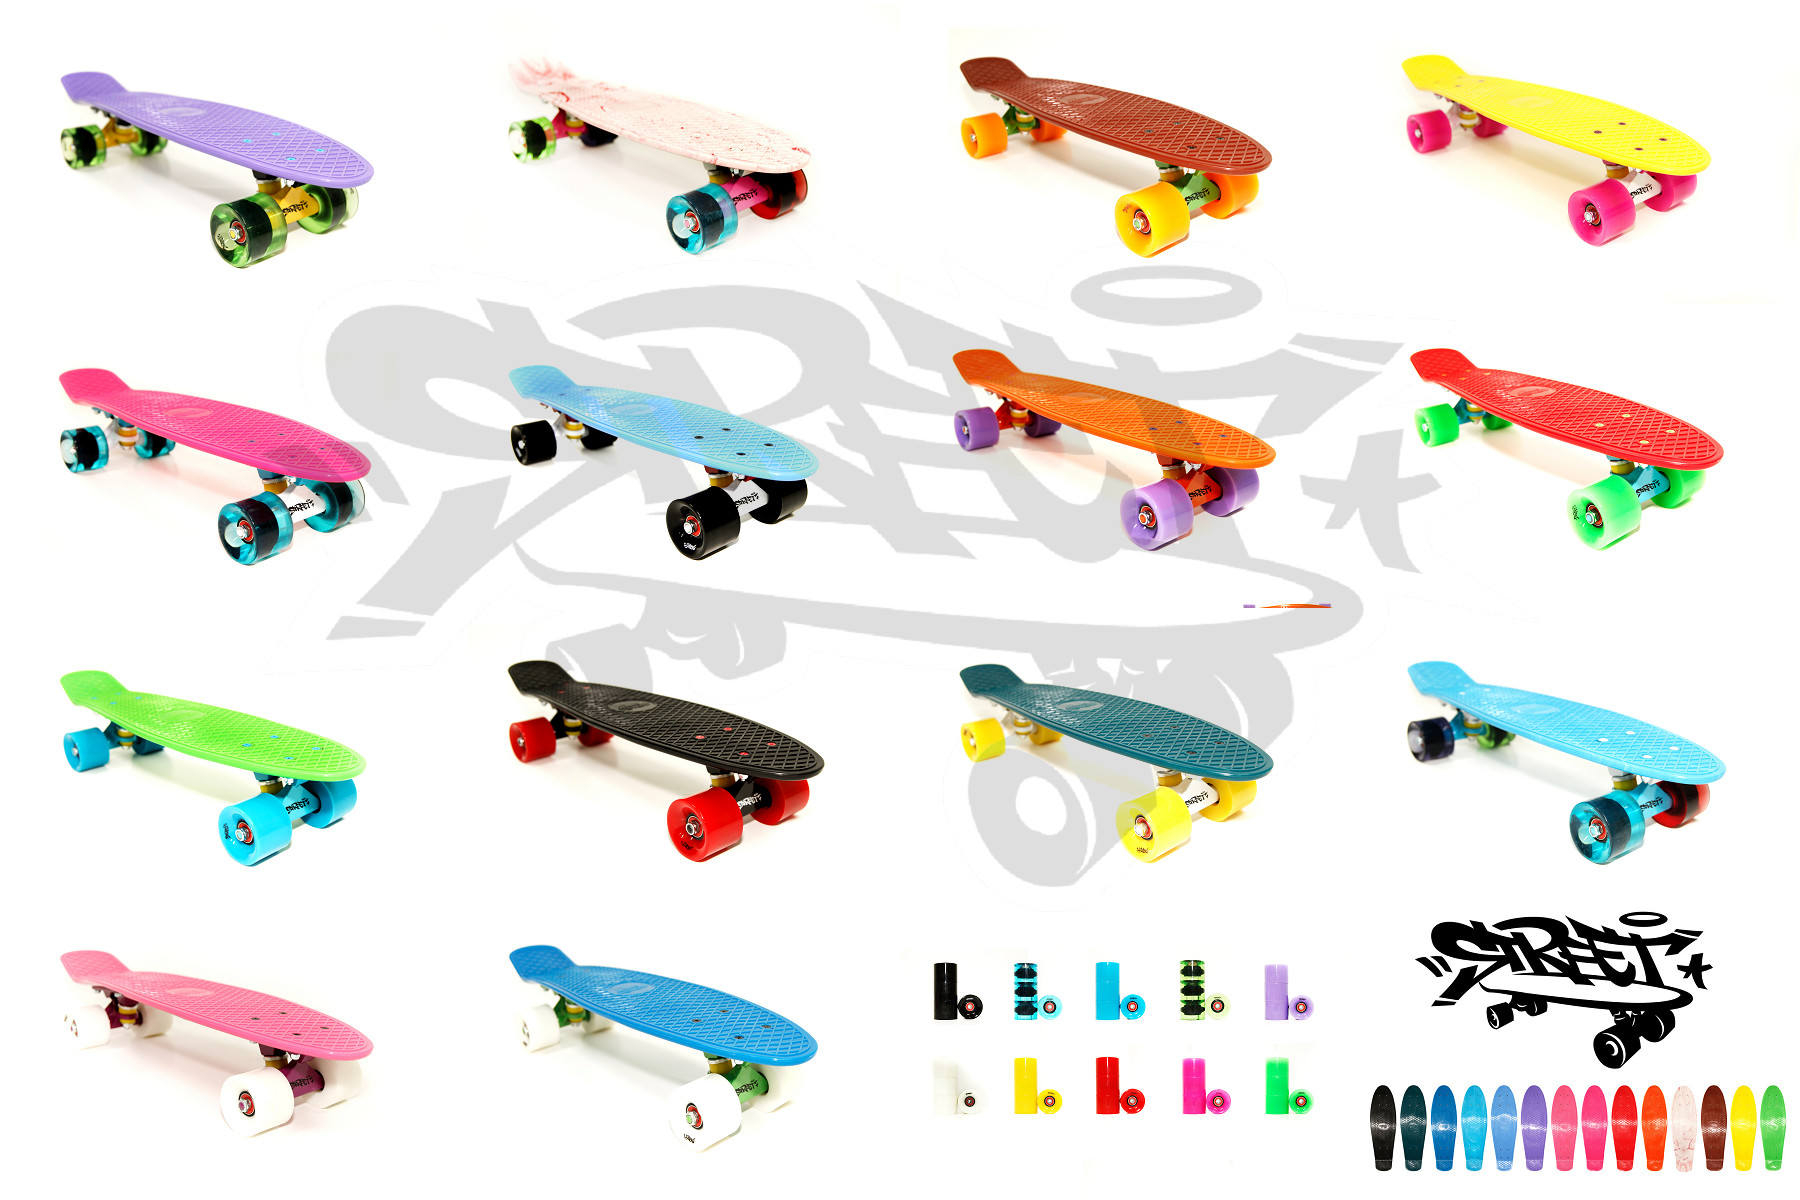 Street skateboards For Kids and Beginners